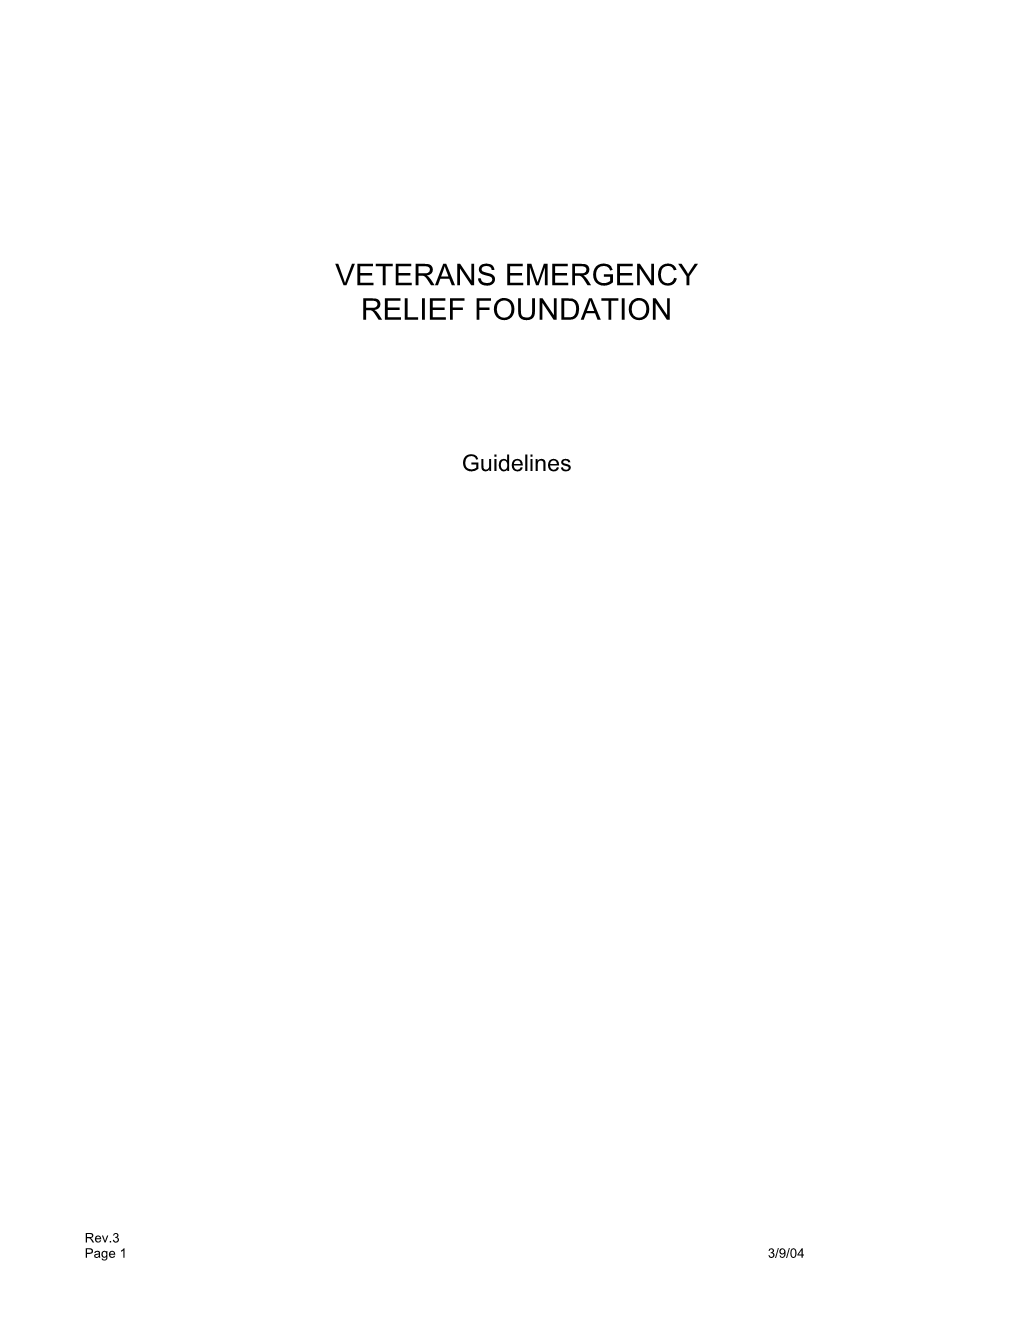 Vietnam-Era Veterans Emergency